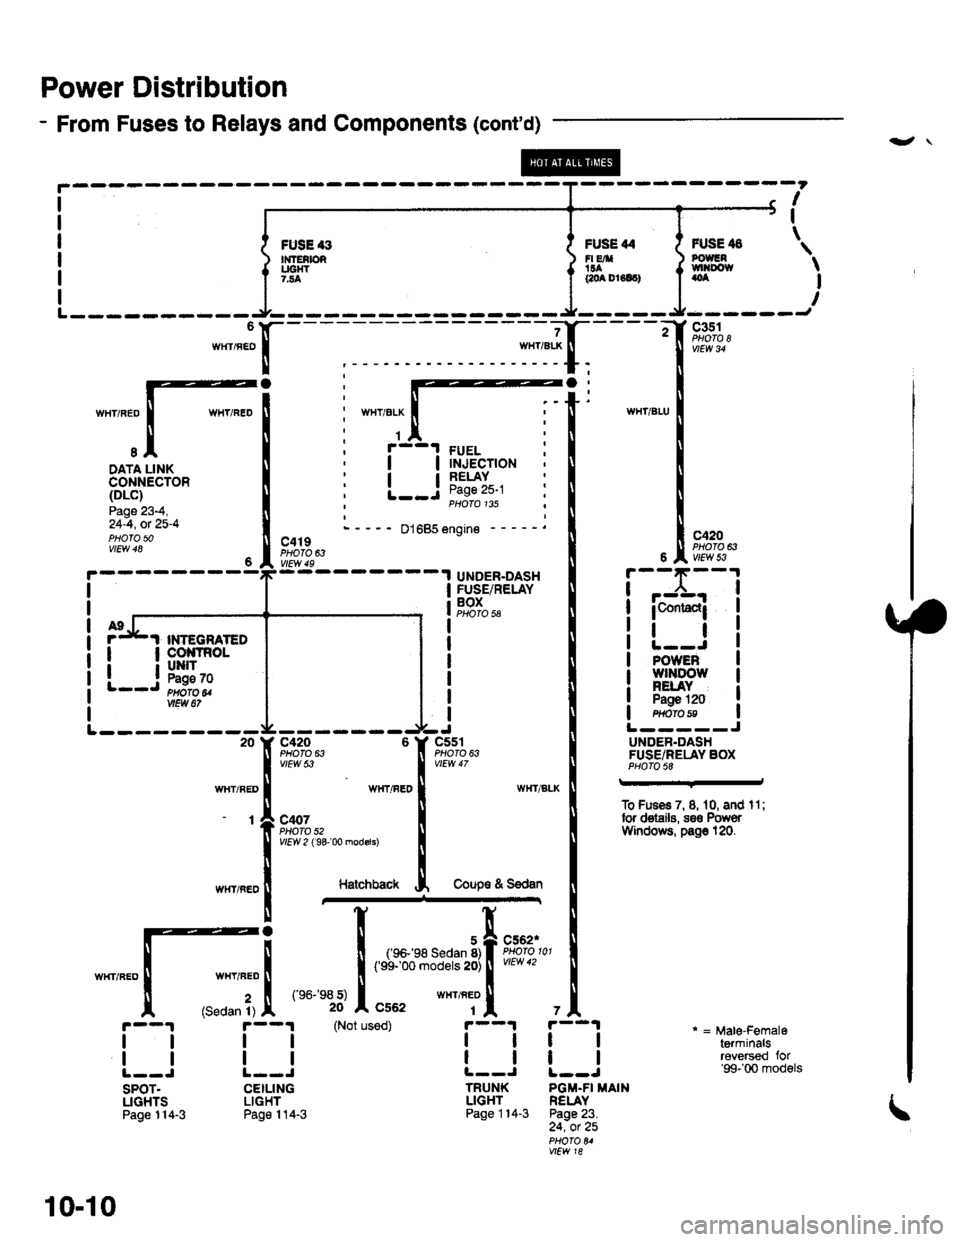 HONDA CIVIC 1996 6.G Workshop Manual Power Distribution
- From Fuses to Relays and Components (contd)
-",JX-
I
I
\FUSE 3n{fEtbRUC|{T7..4
FUSE 44FI EA!aacoa Dr6lc)
FUSE il8POUGNtvtl|Do{taoa
c351
c420PHOTO 63
I-.:CrJ
WIIT/ELX
1
I
I
I
I